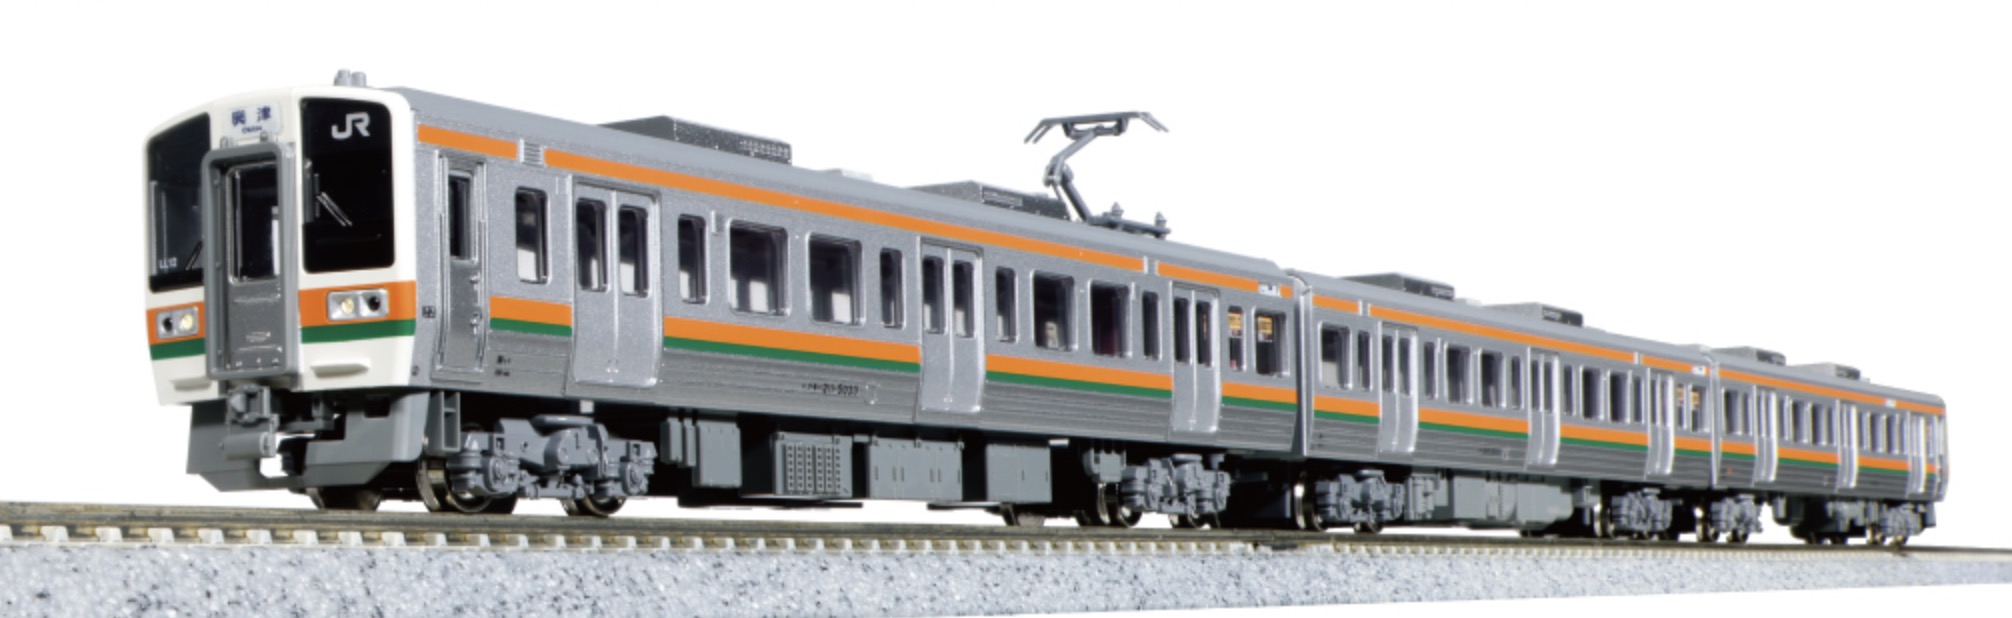 N Scale - Kato - 10-1861 - Passenger Train, Electric, Series 211 - Japan Railways Central - 3-Car Set